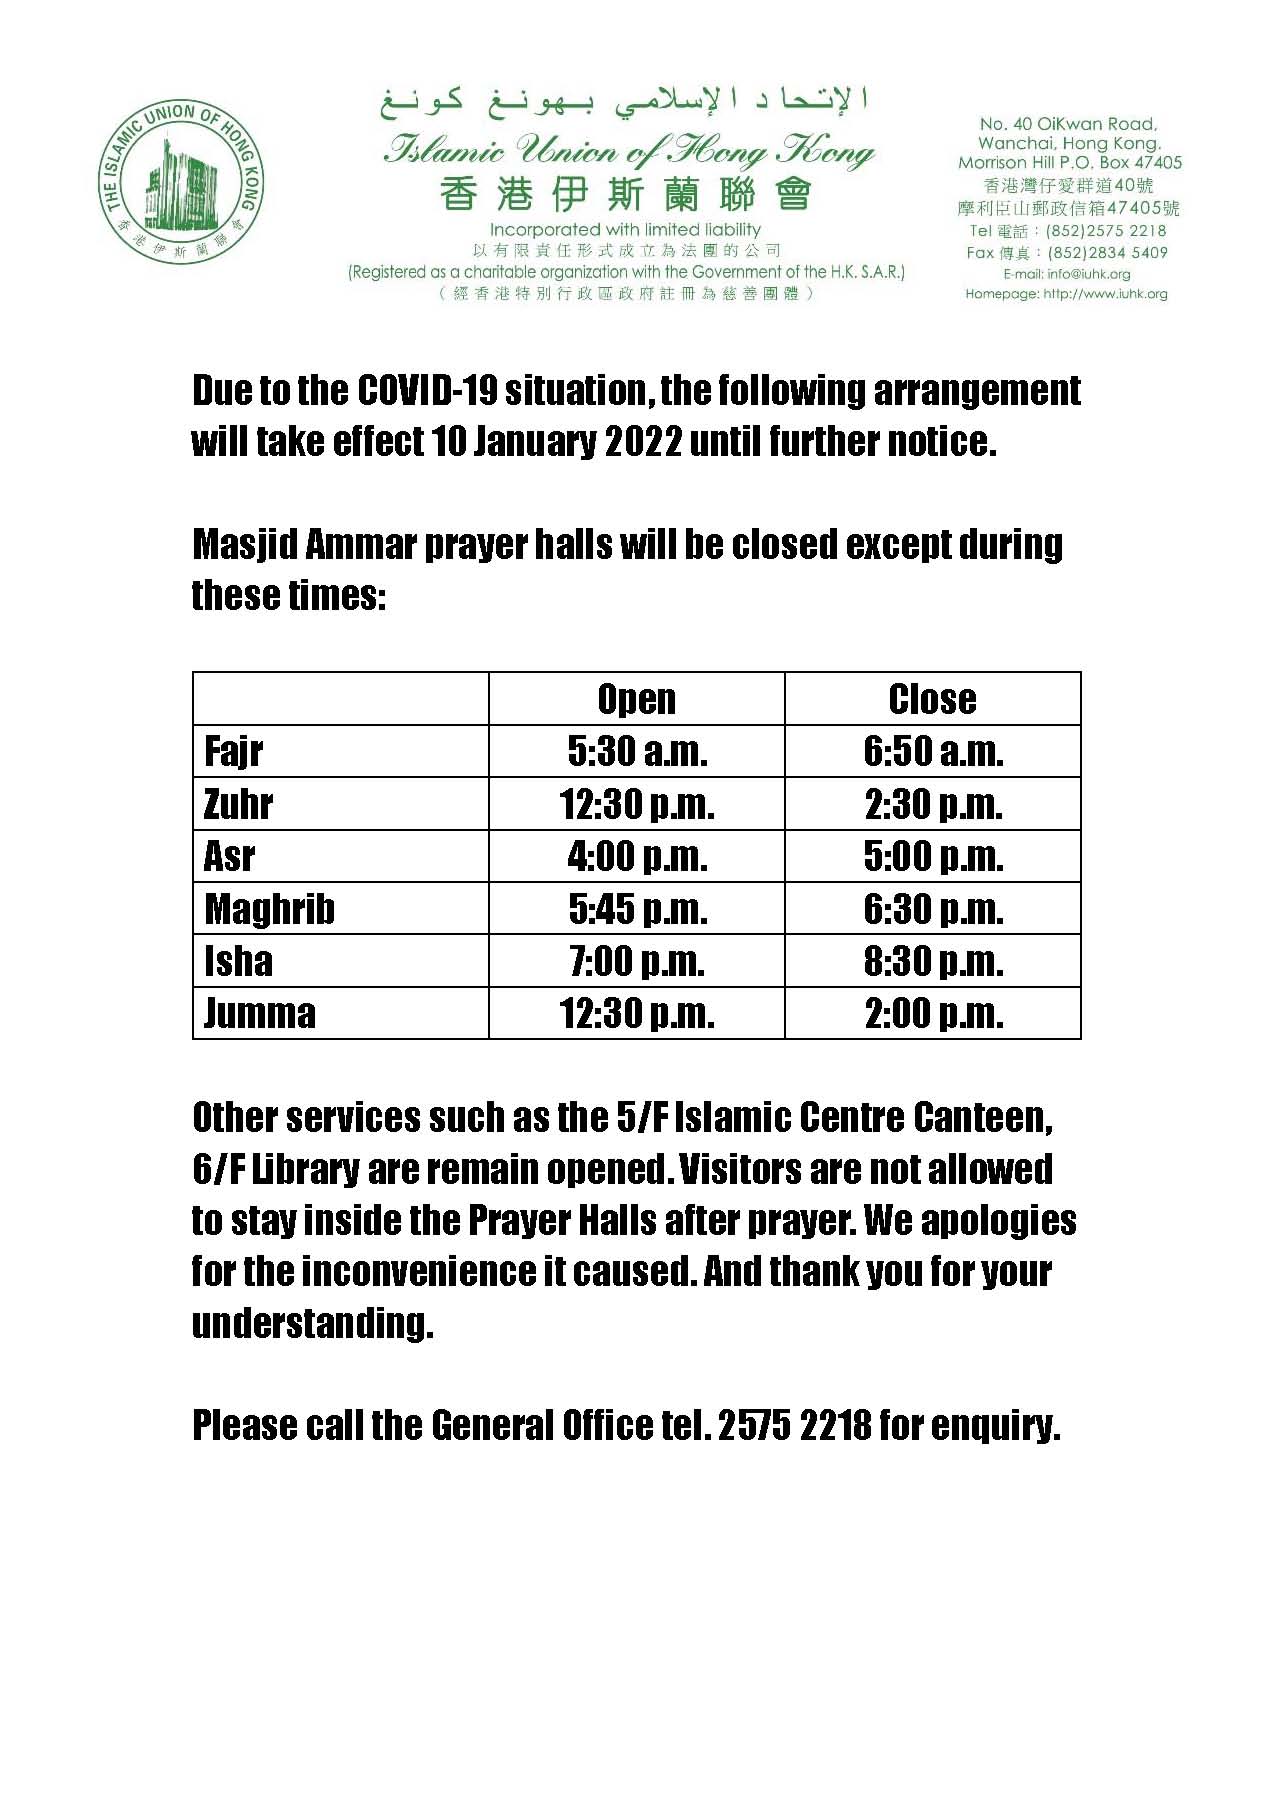 Prayer Halls opening time arrangement